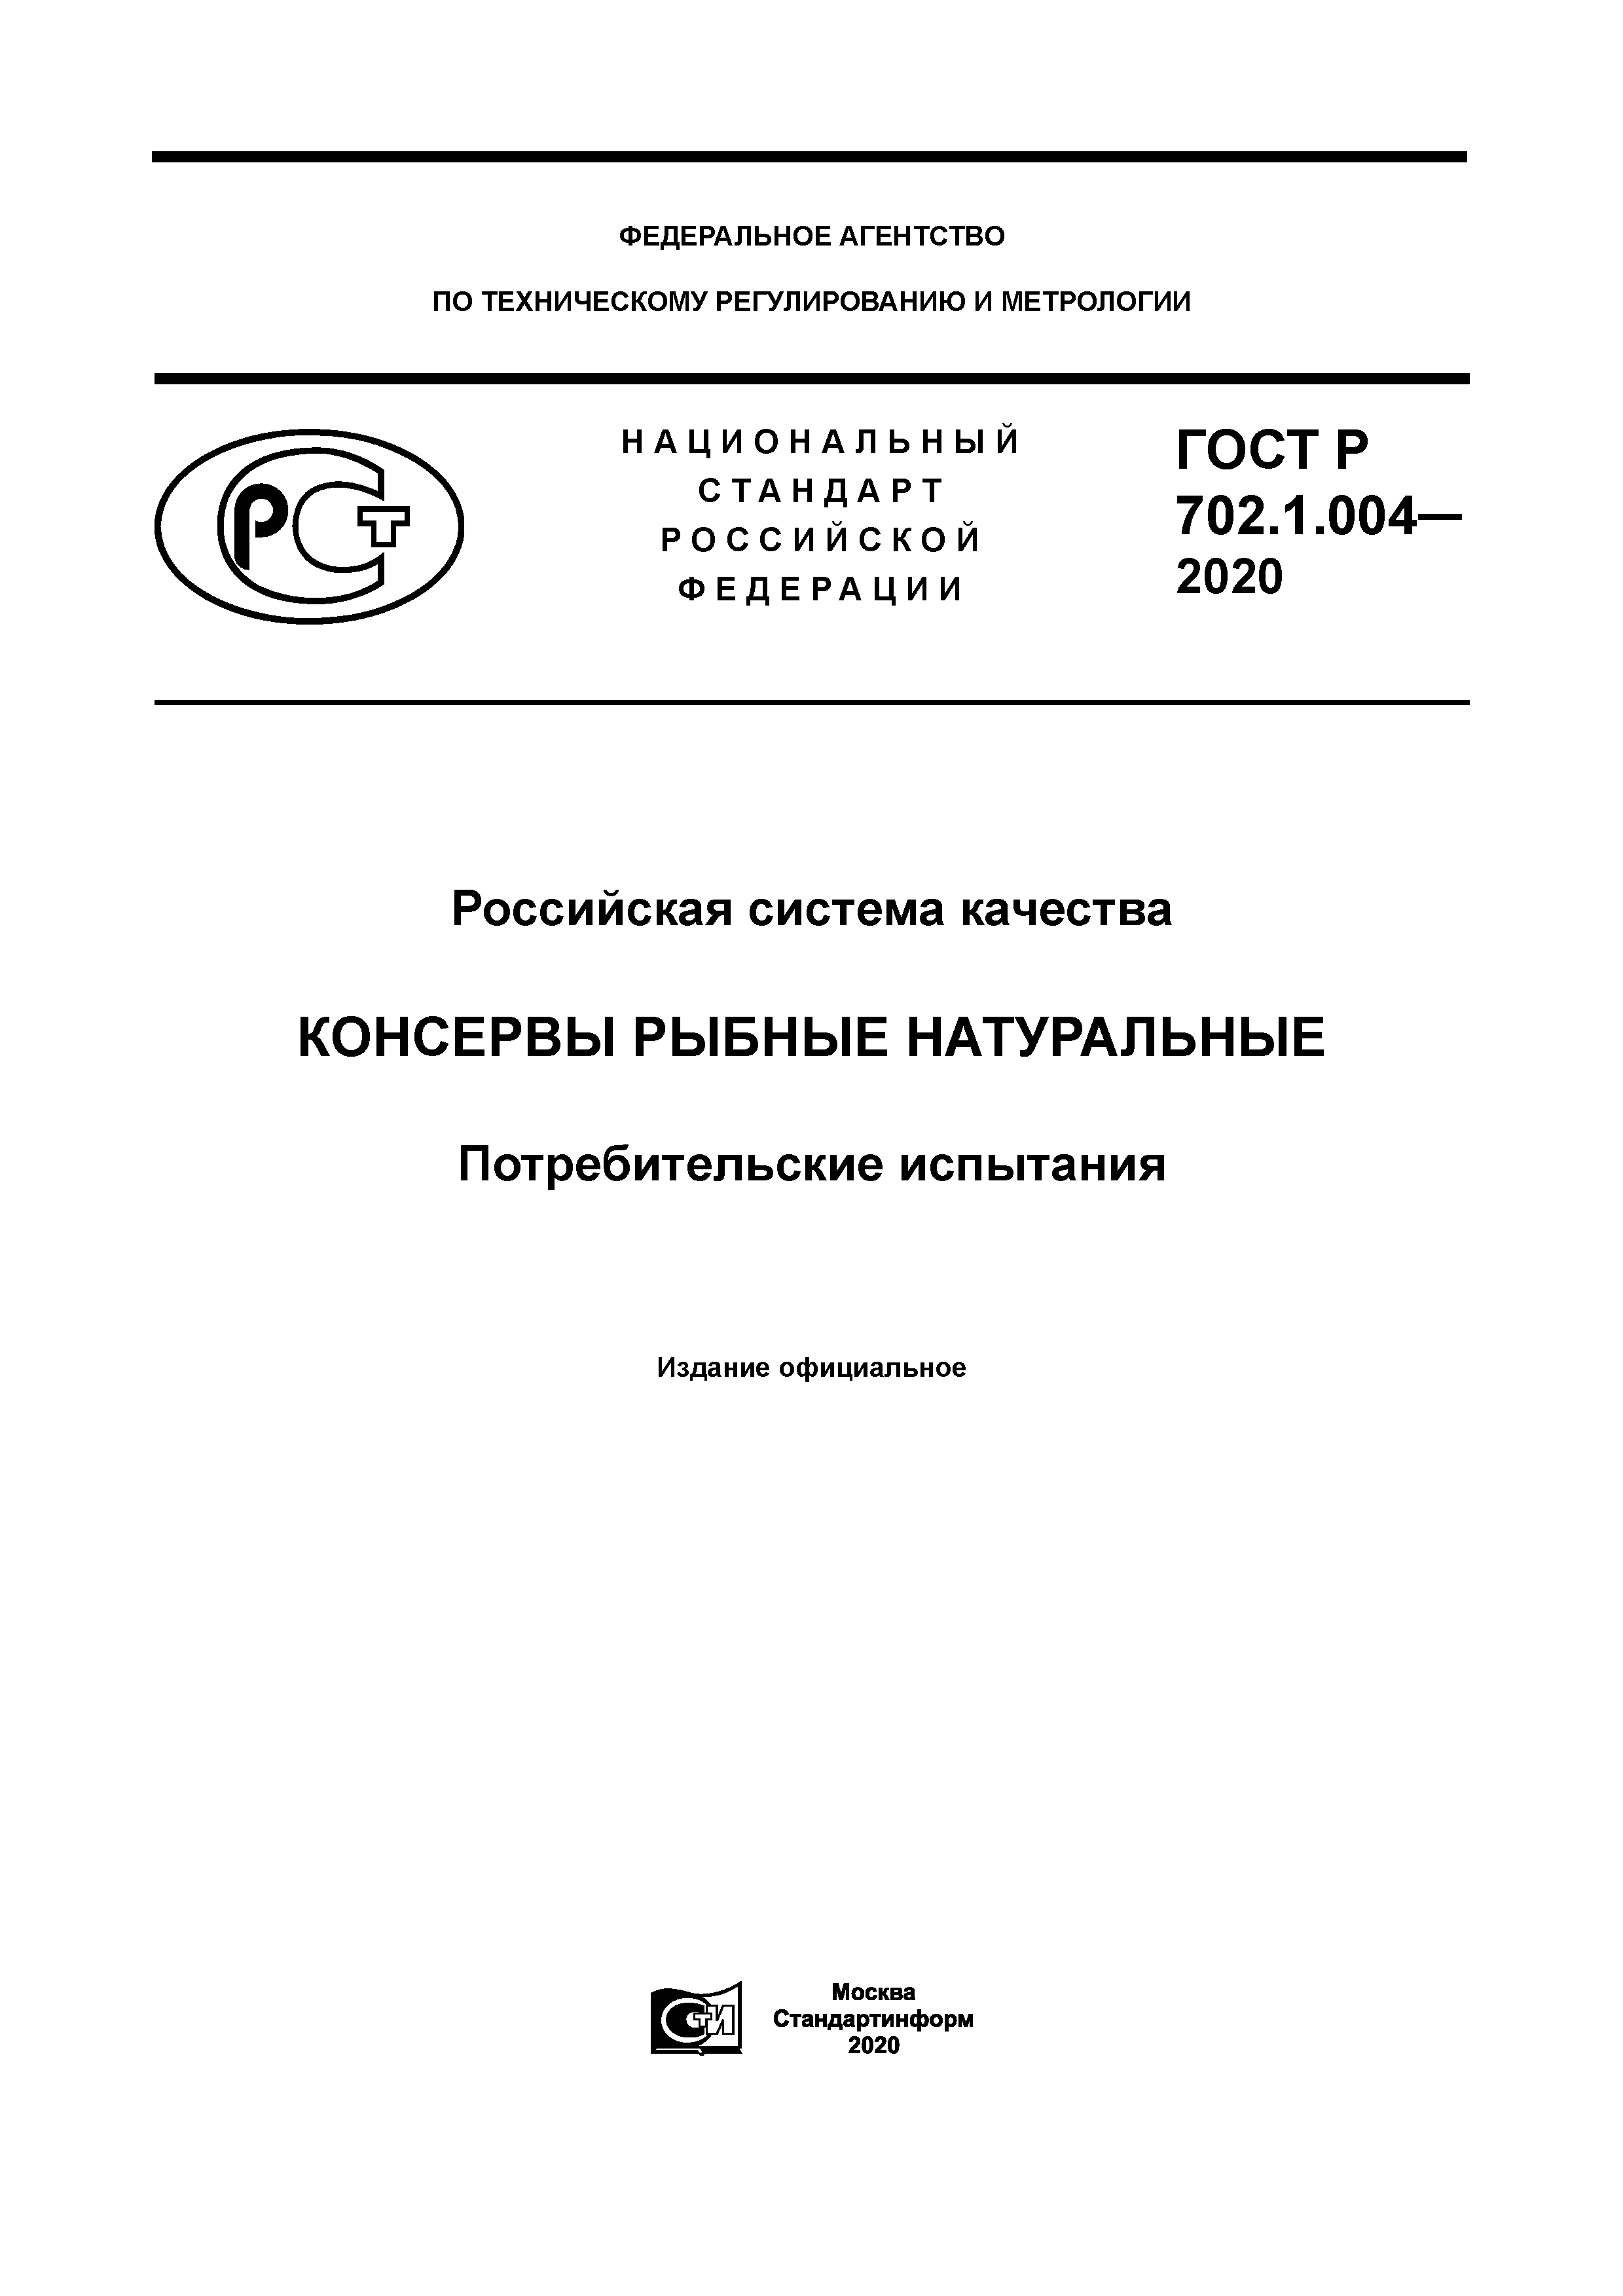 ГОСТ Р 702.1.004-2020